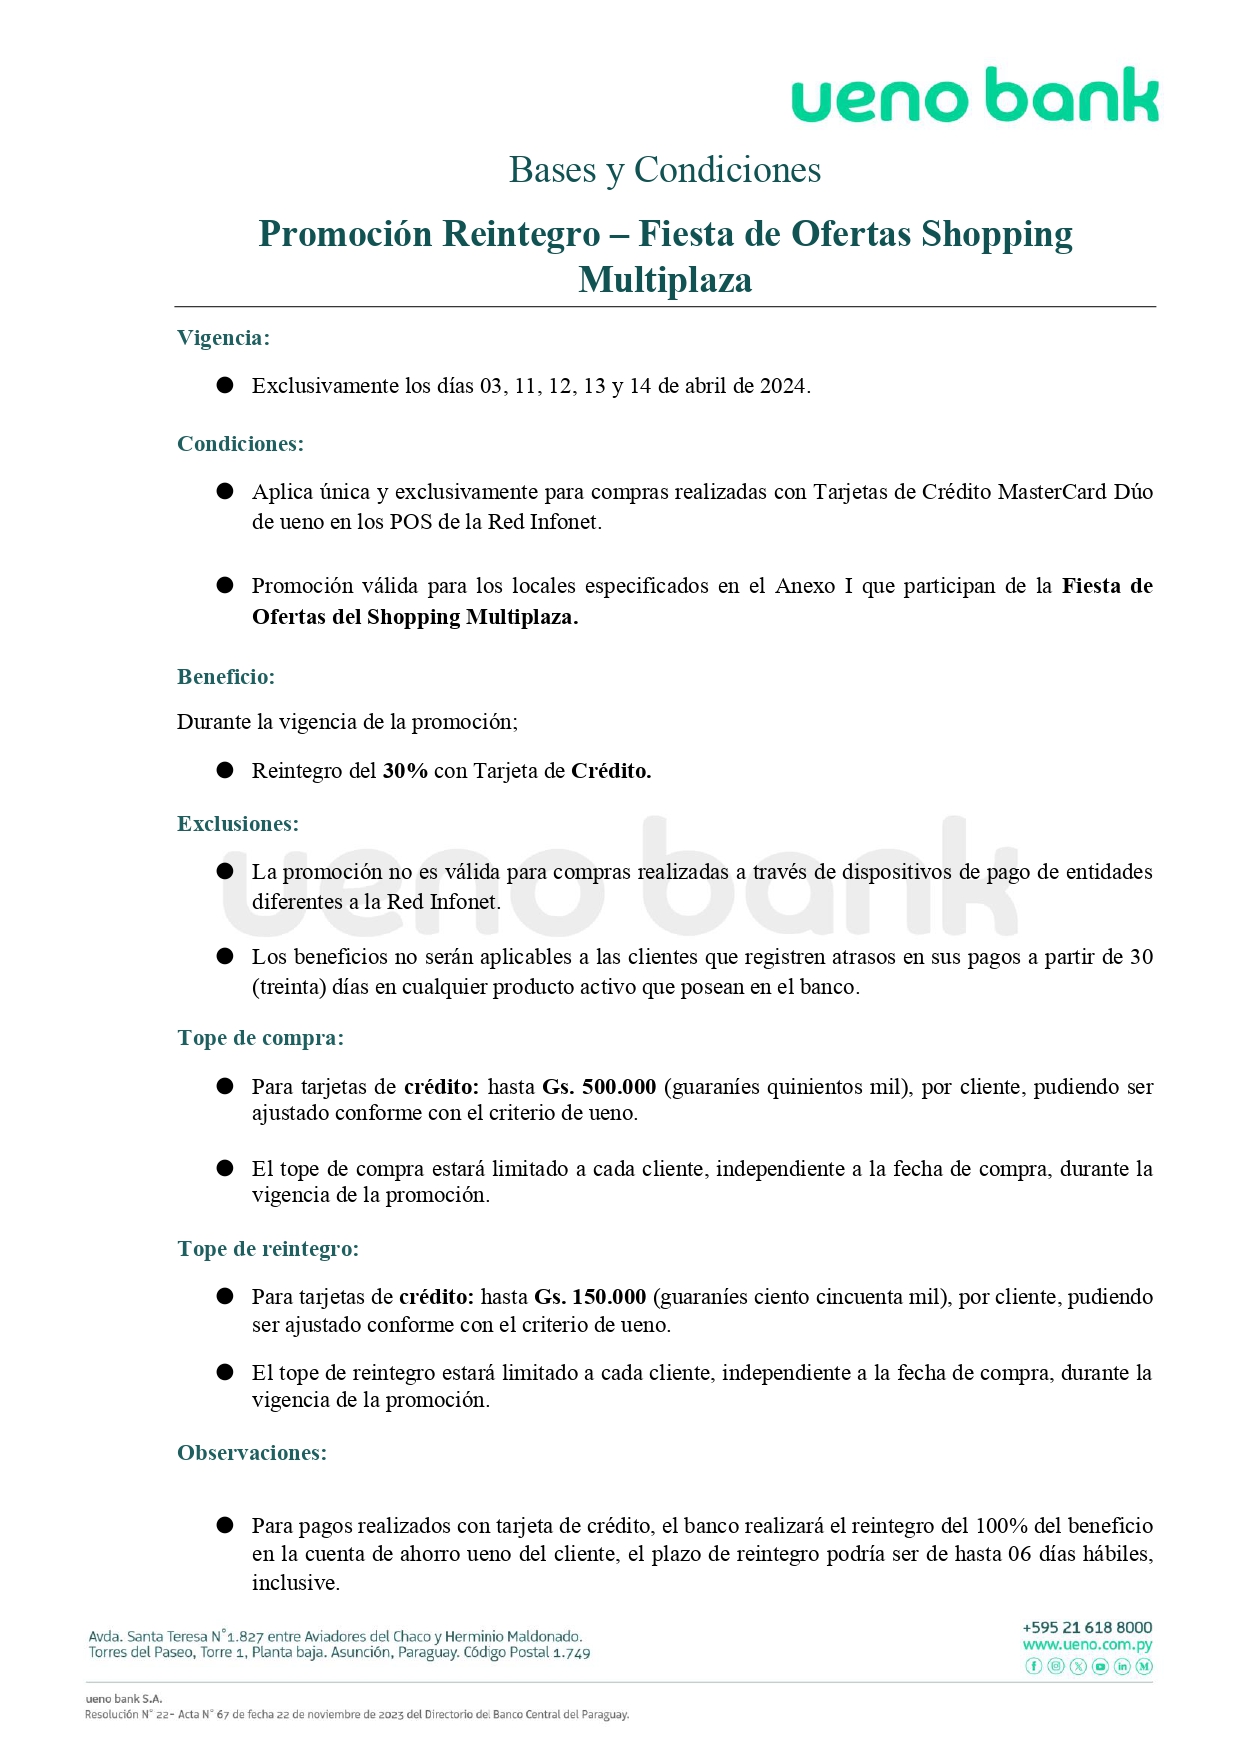 byc FIESTA DE OFERTAS MULTIPLAZA (1)_page-0001.jpg